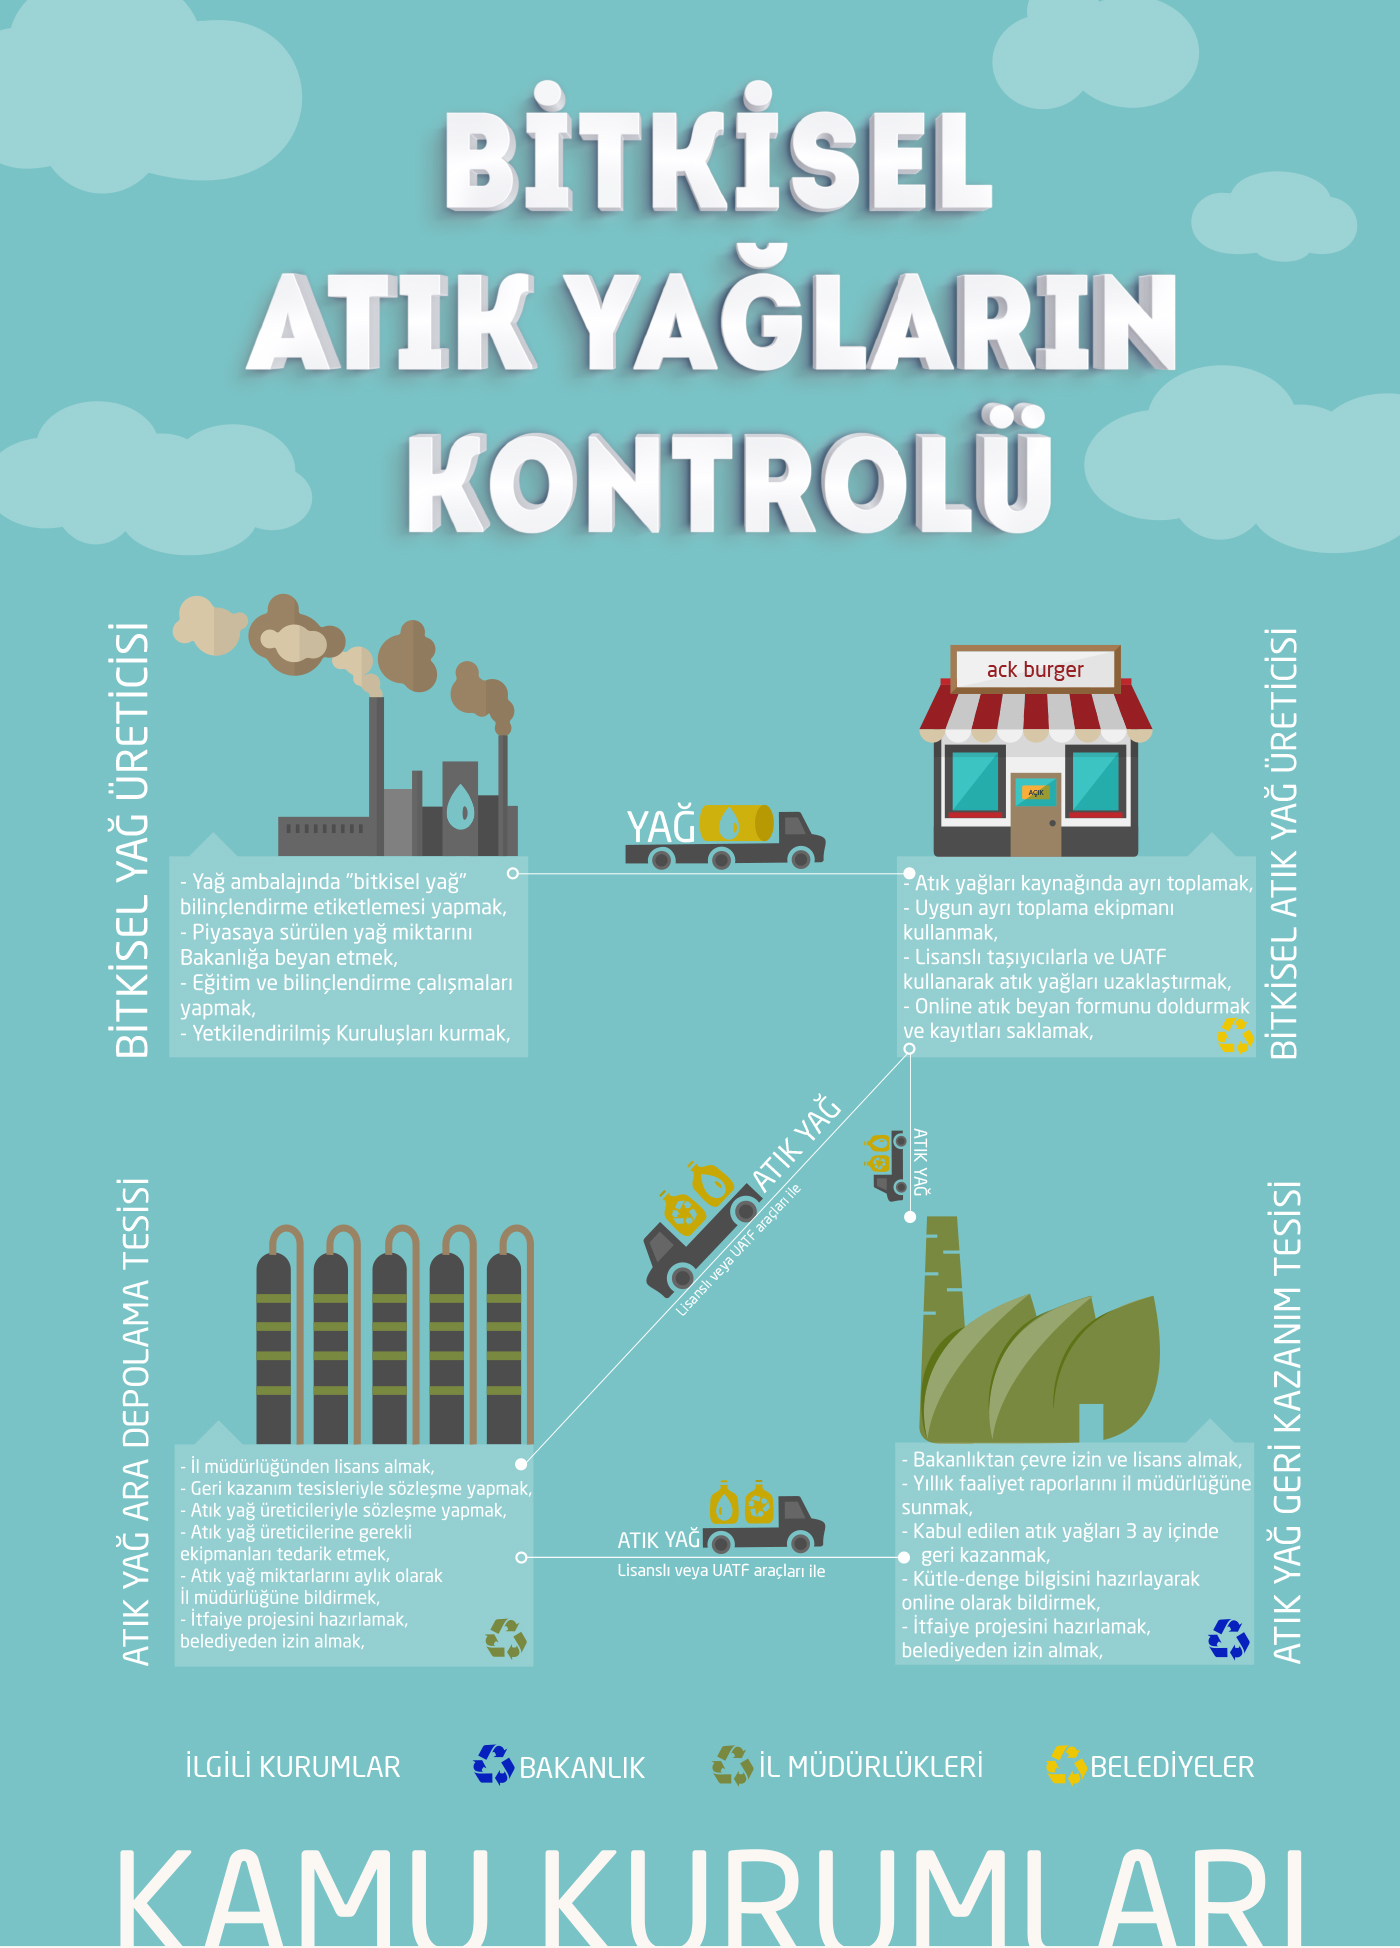 Marmara Municipalities Union Infographic and Motion graphic works marmara istanbul deniz çevre